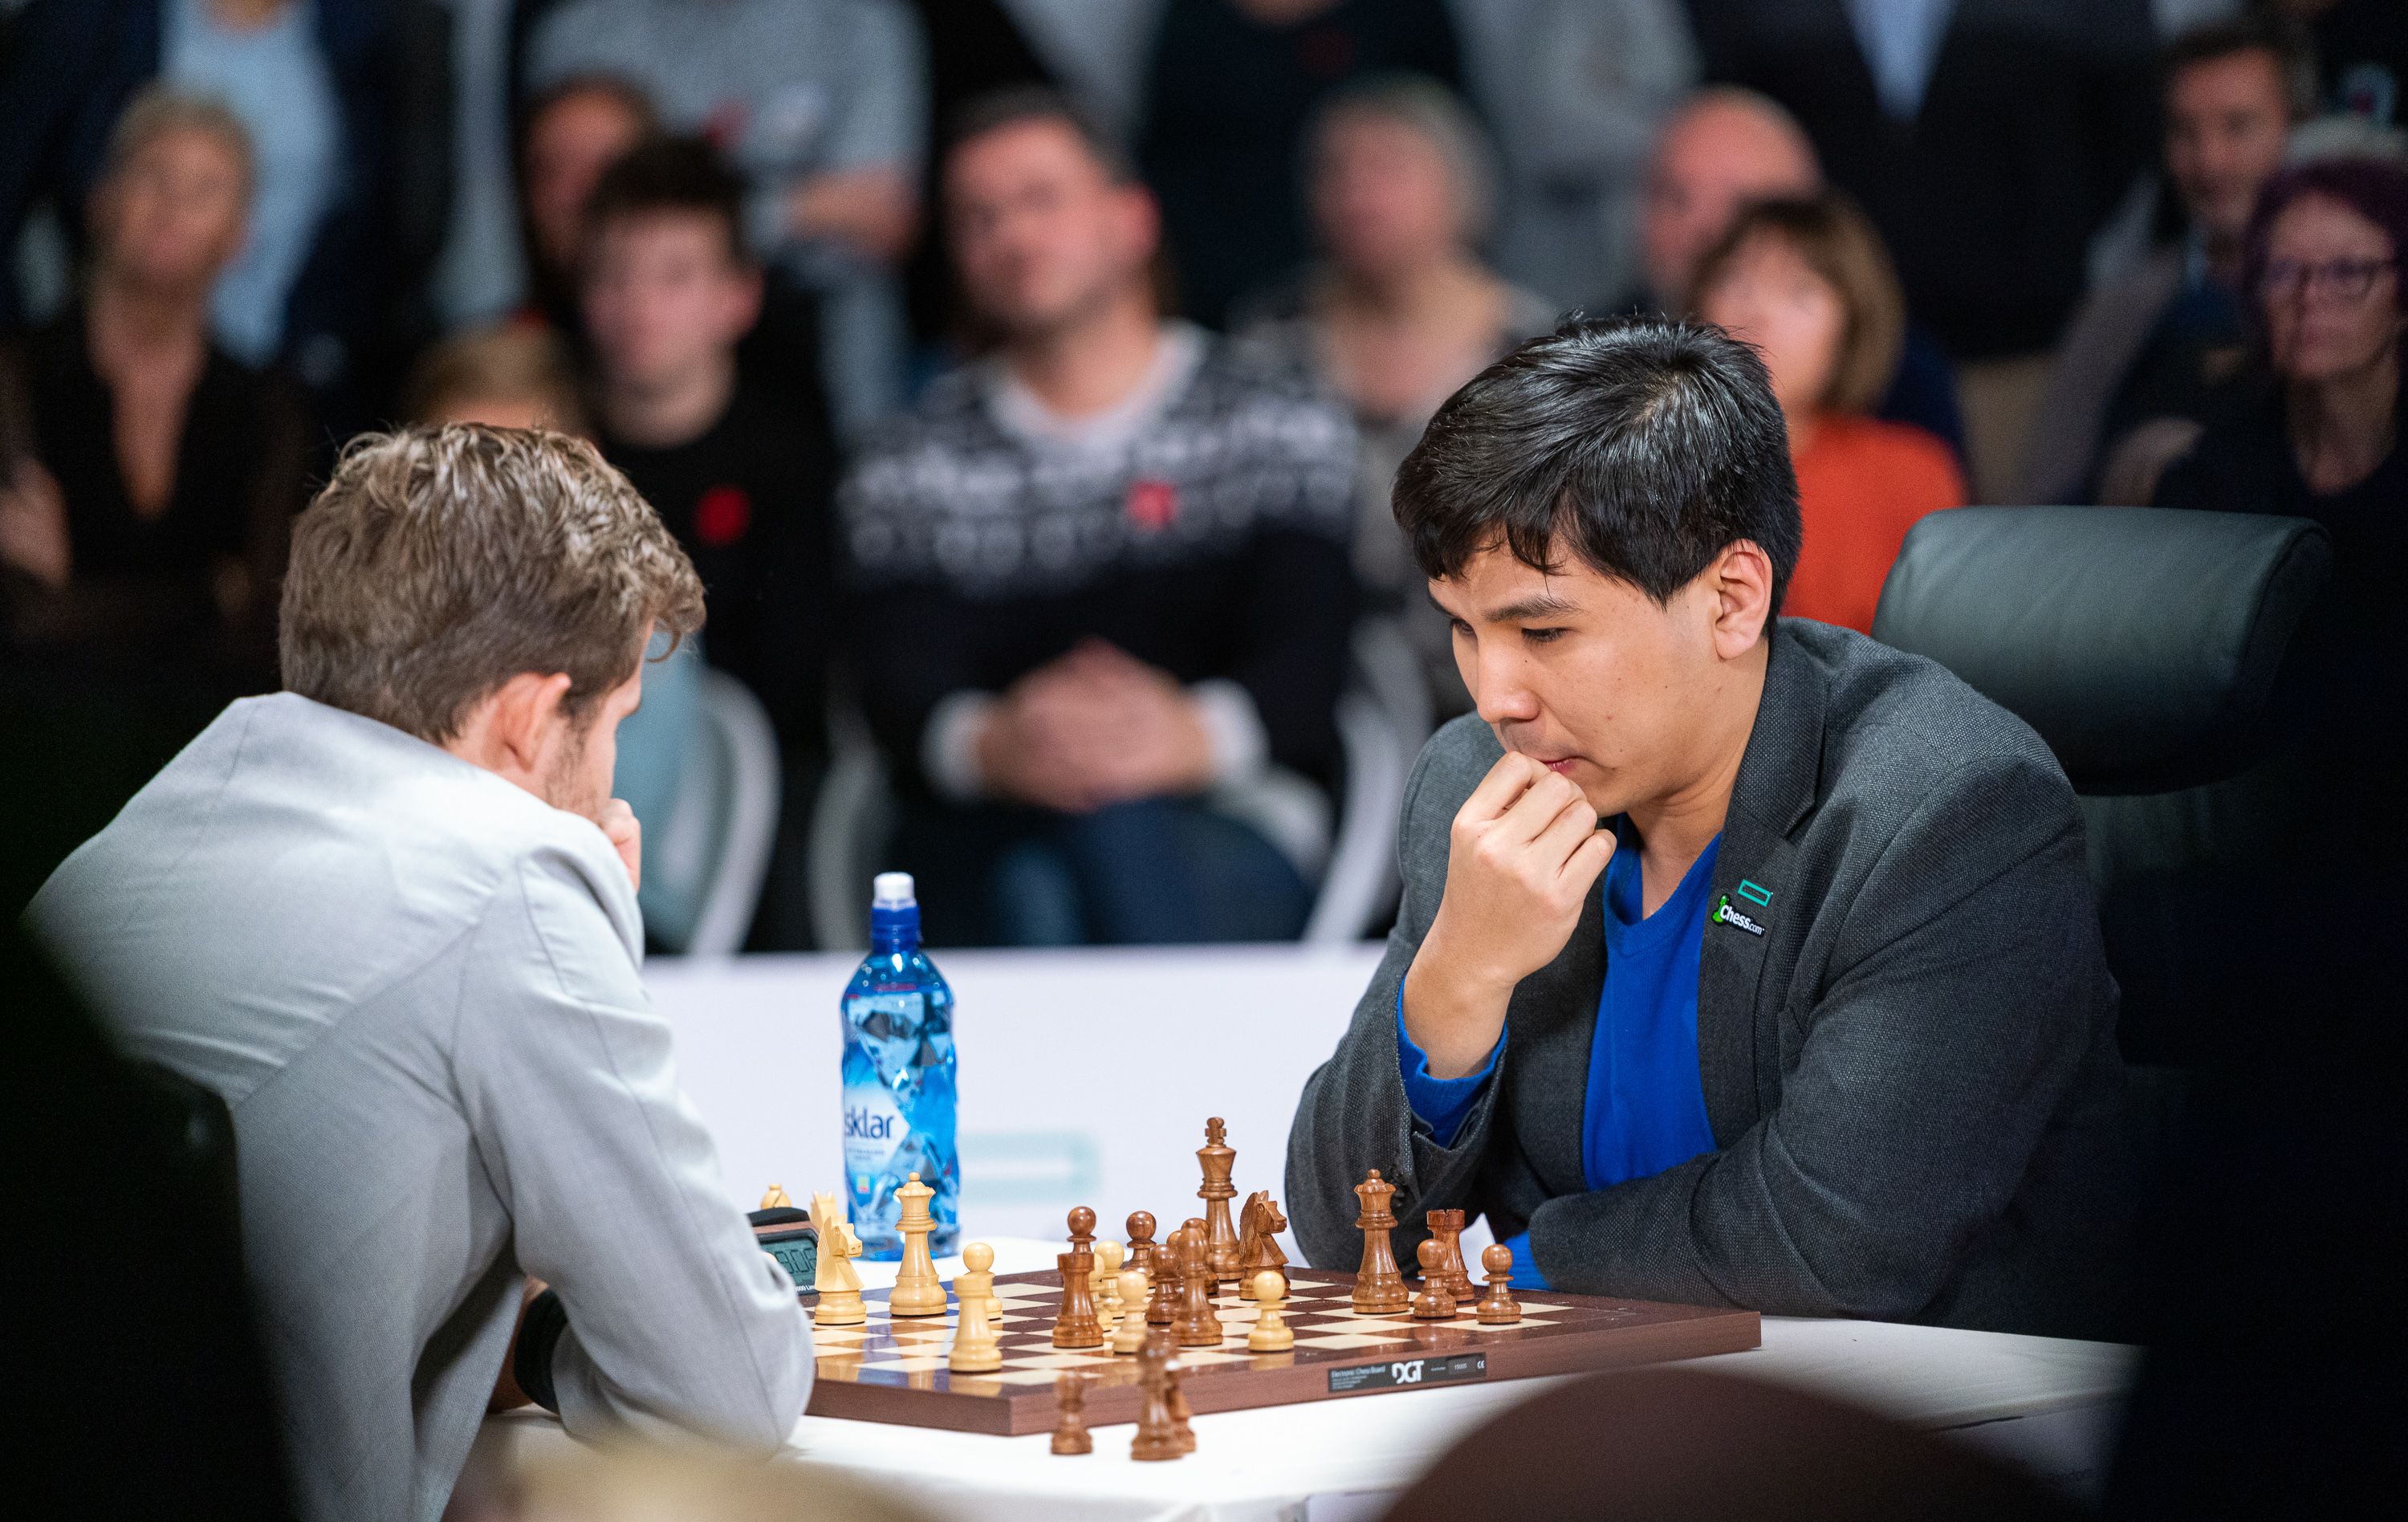 Anunciamos o Campeonato Mundial de Xadrez Fischer Random da FIDE